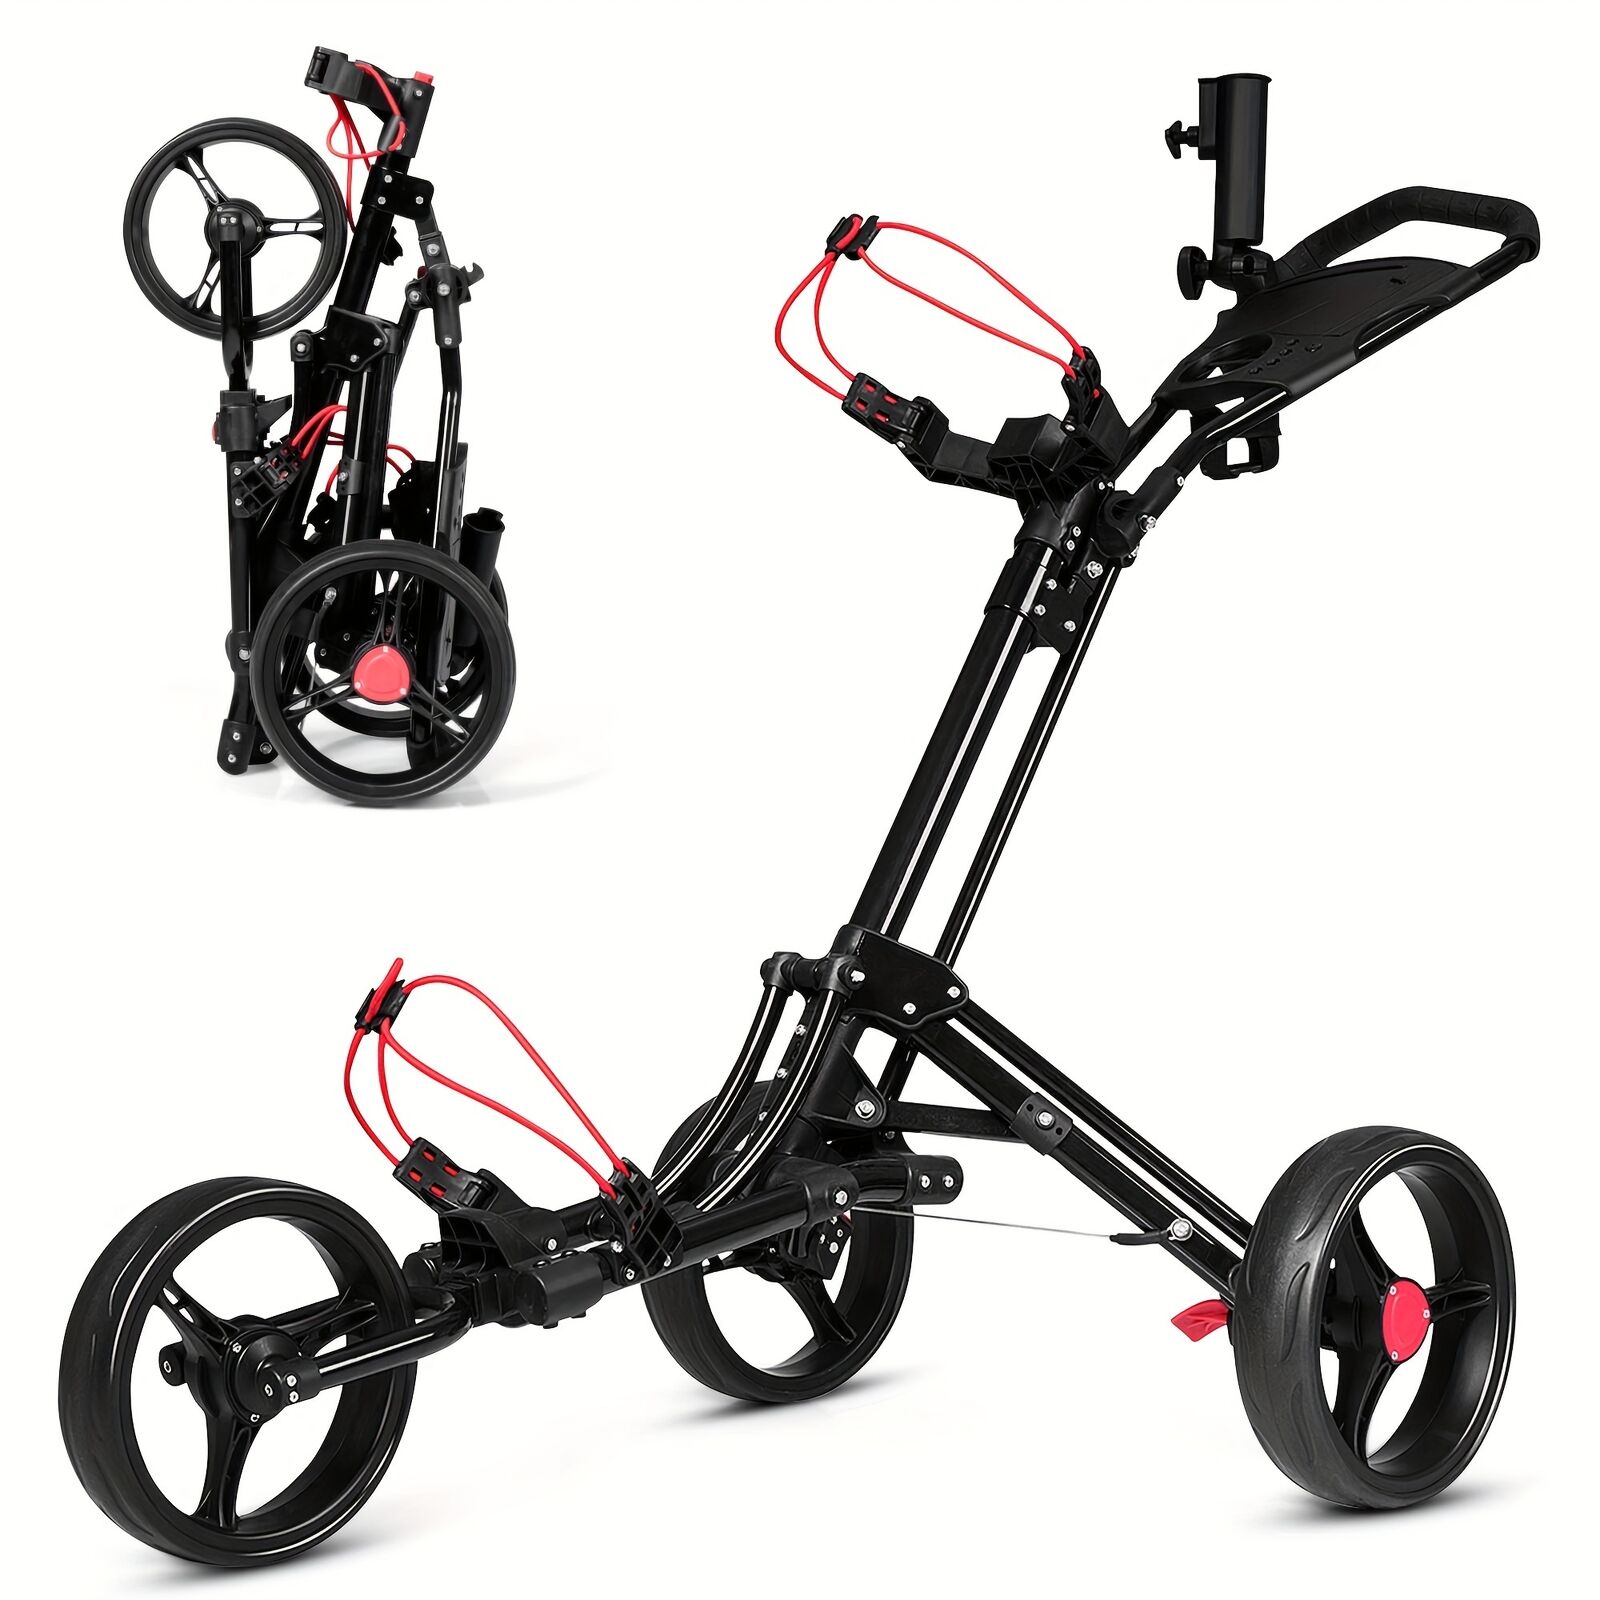 COSTWAT 1pc Foldable 3 Wheels Steel Golf Pull Push Cart W/ Umbrella Holder